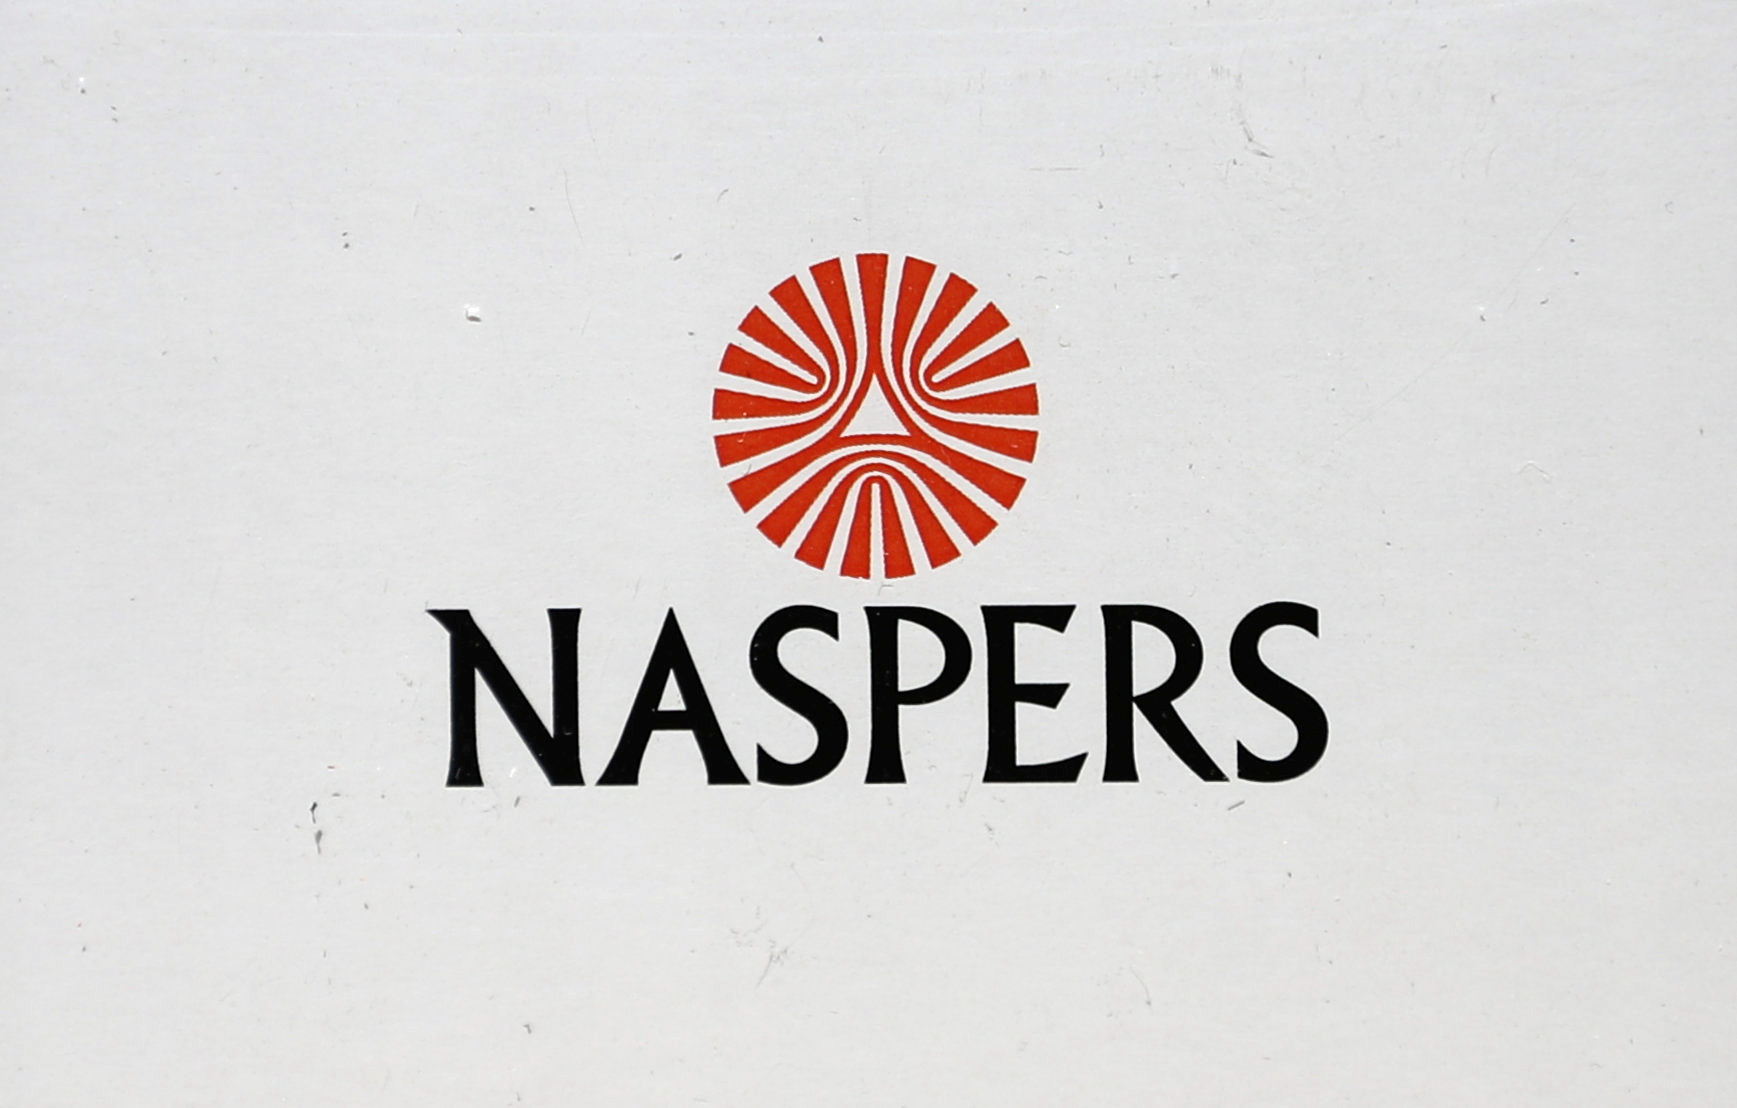 Naspers logo is seen in Johannesburg, South Africa, October 9, 2019. REUTERS/Siphiwe Sibeko